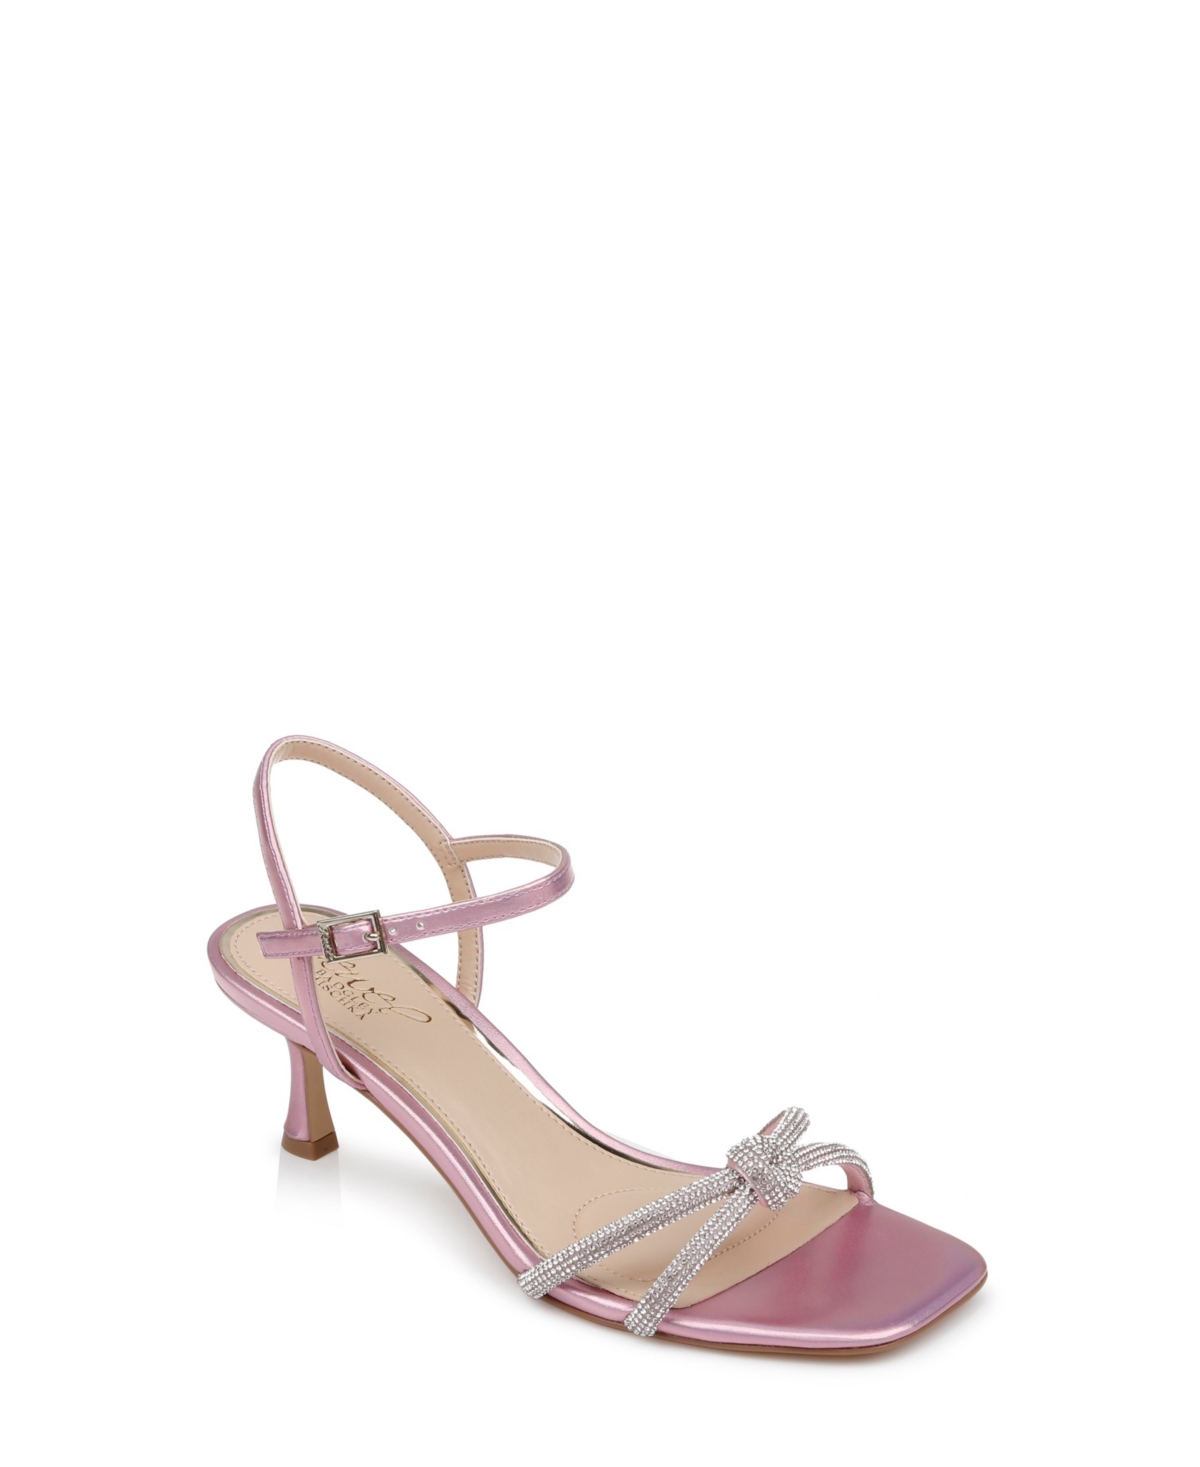 Women's Maci rhinestone Knot Kitten Heel Evening Sandals - Pink Pearlized